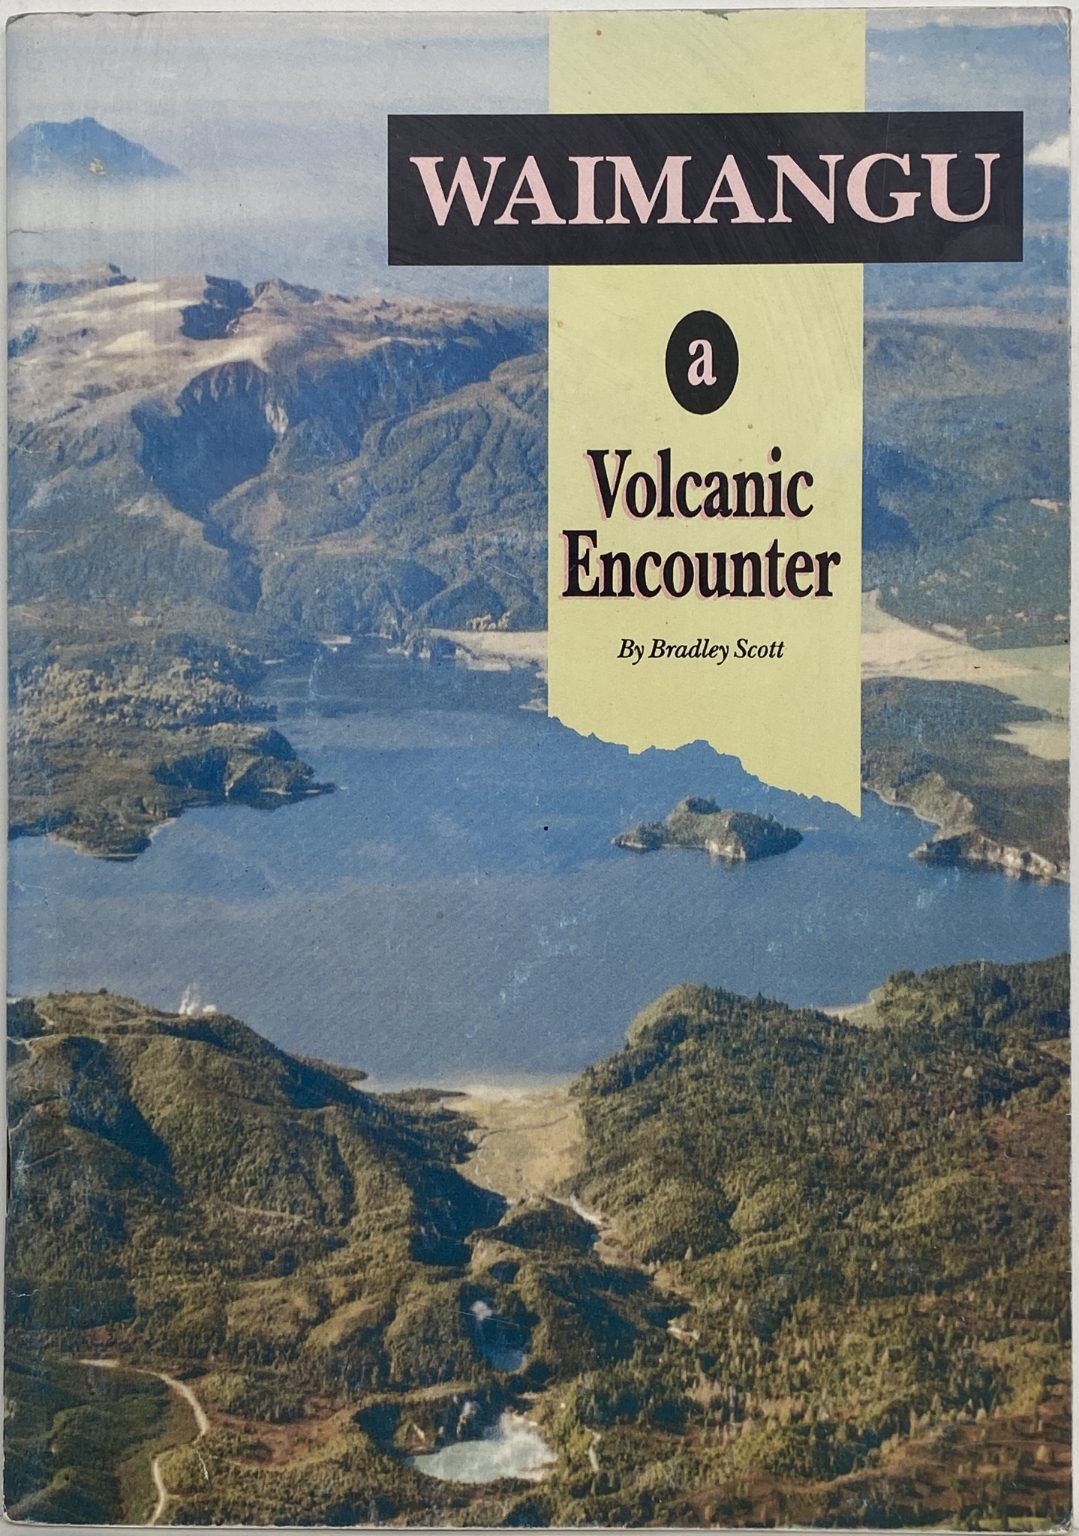 WAIMANGU: A Volcanic Encounter